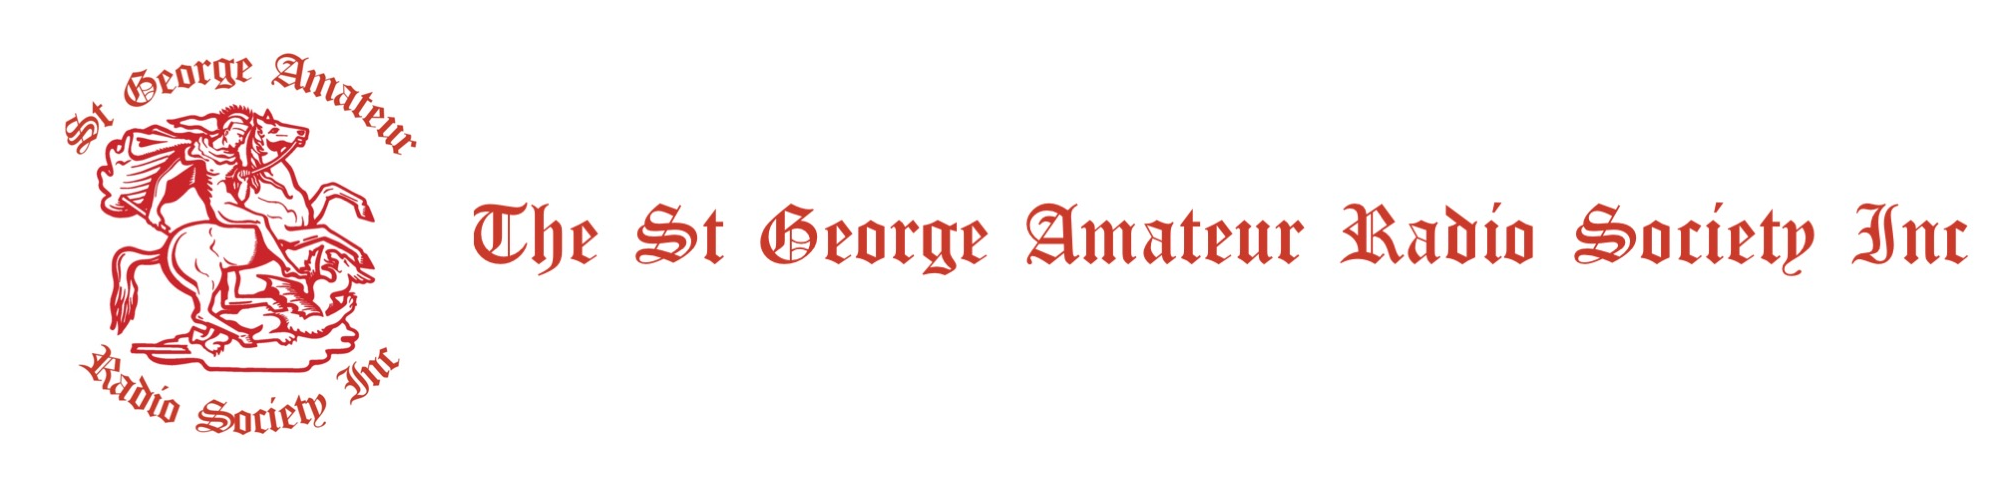 SGARS - The St George Amateur Radio Society